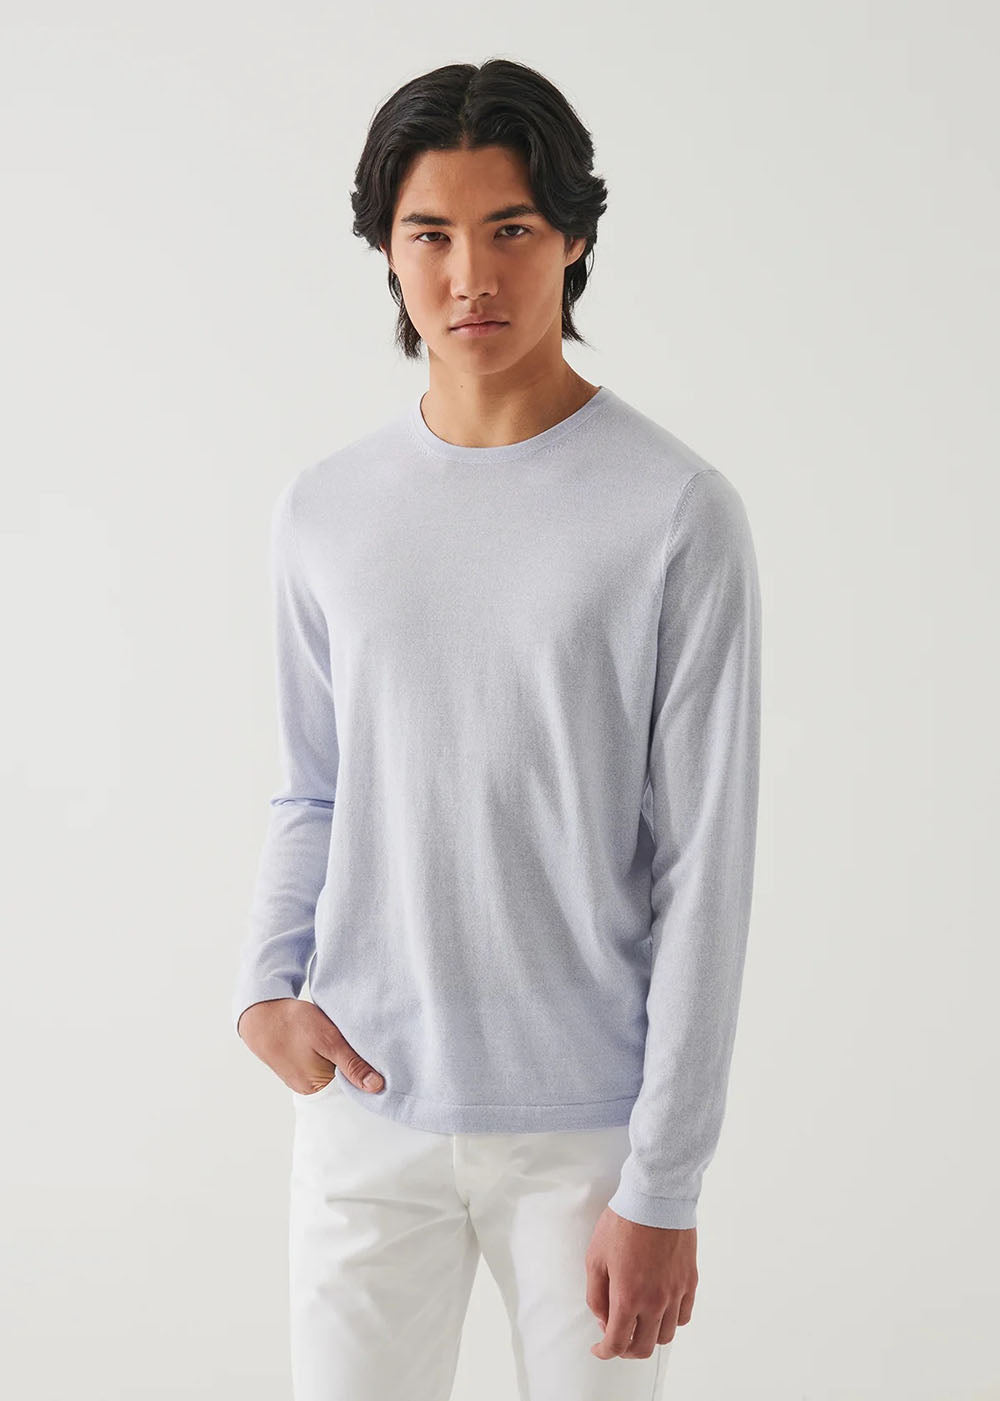 Cotton Cupro Crewneck Sweater - Ocean - Patrick Assaraf - Danali - P154C06X